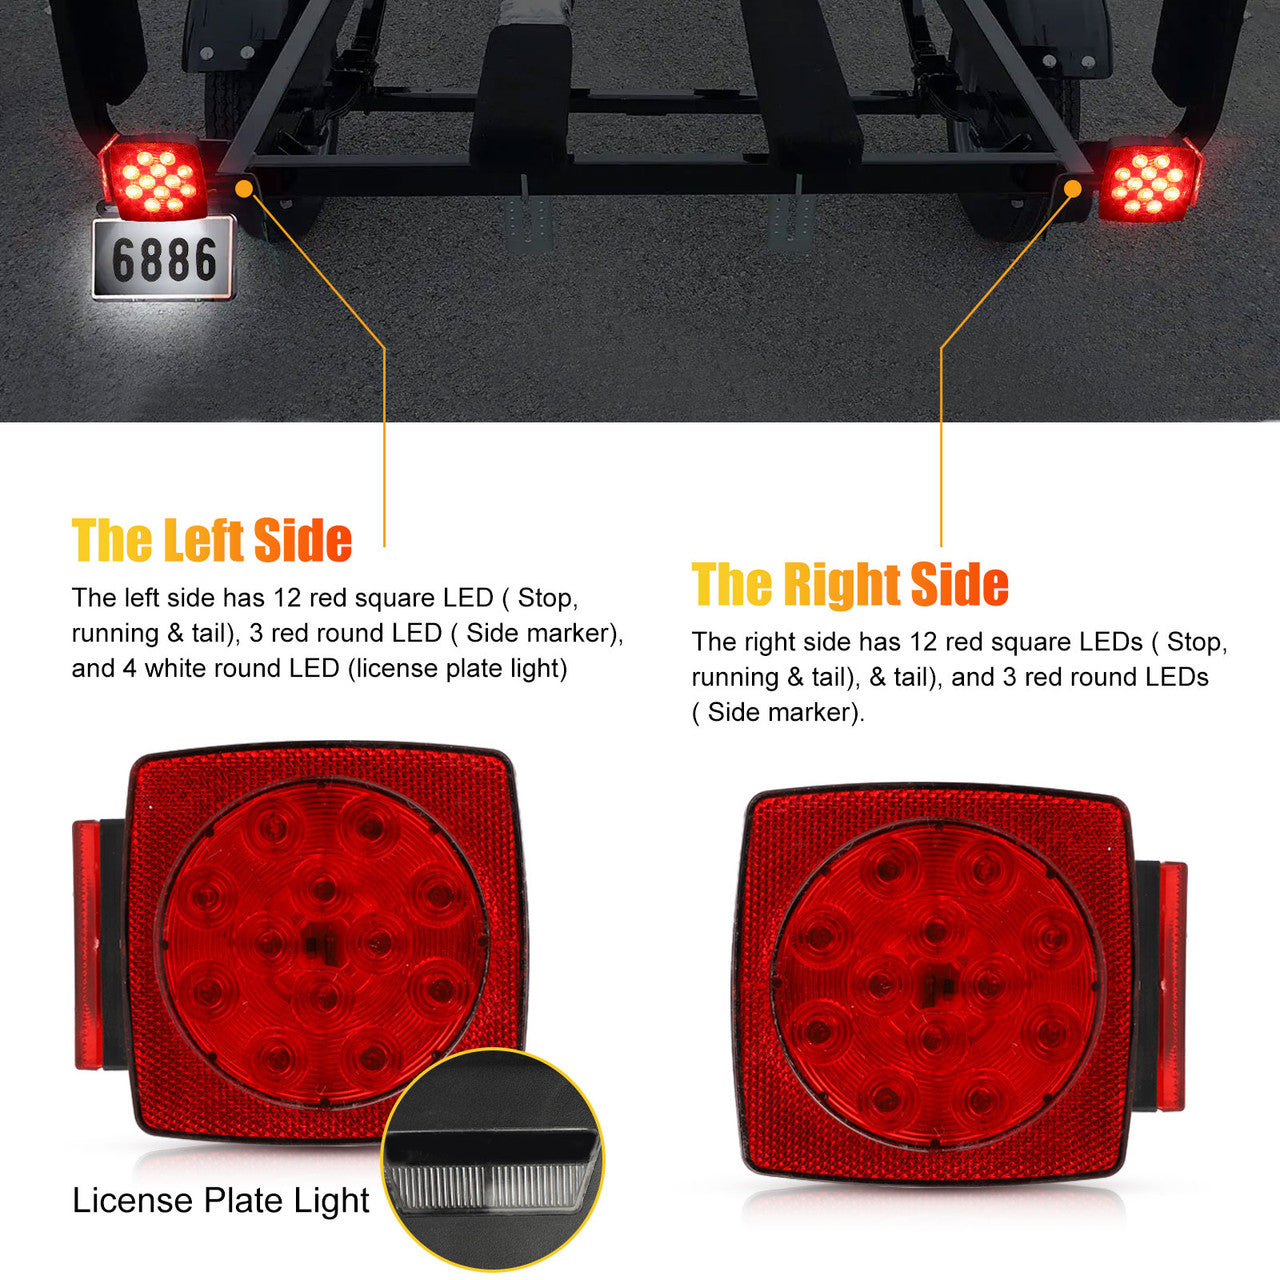 2 Packs Rear LED Trailer Tail Lights - Install Kit, Multi-function Led Trailer Lights,IP68 waterproof rate Boat Truck SUV Trailer